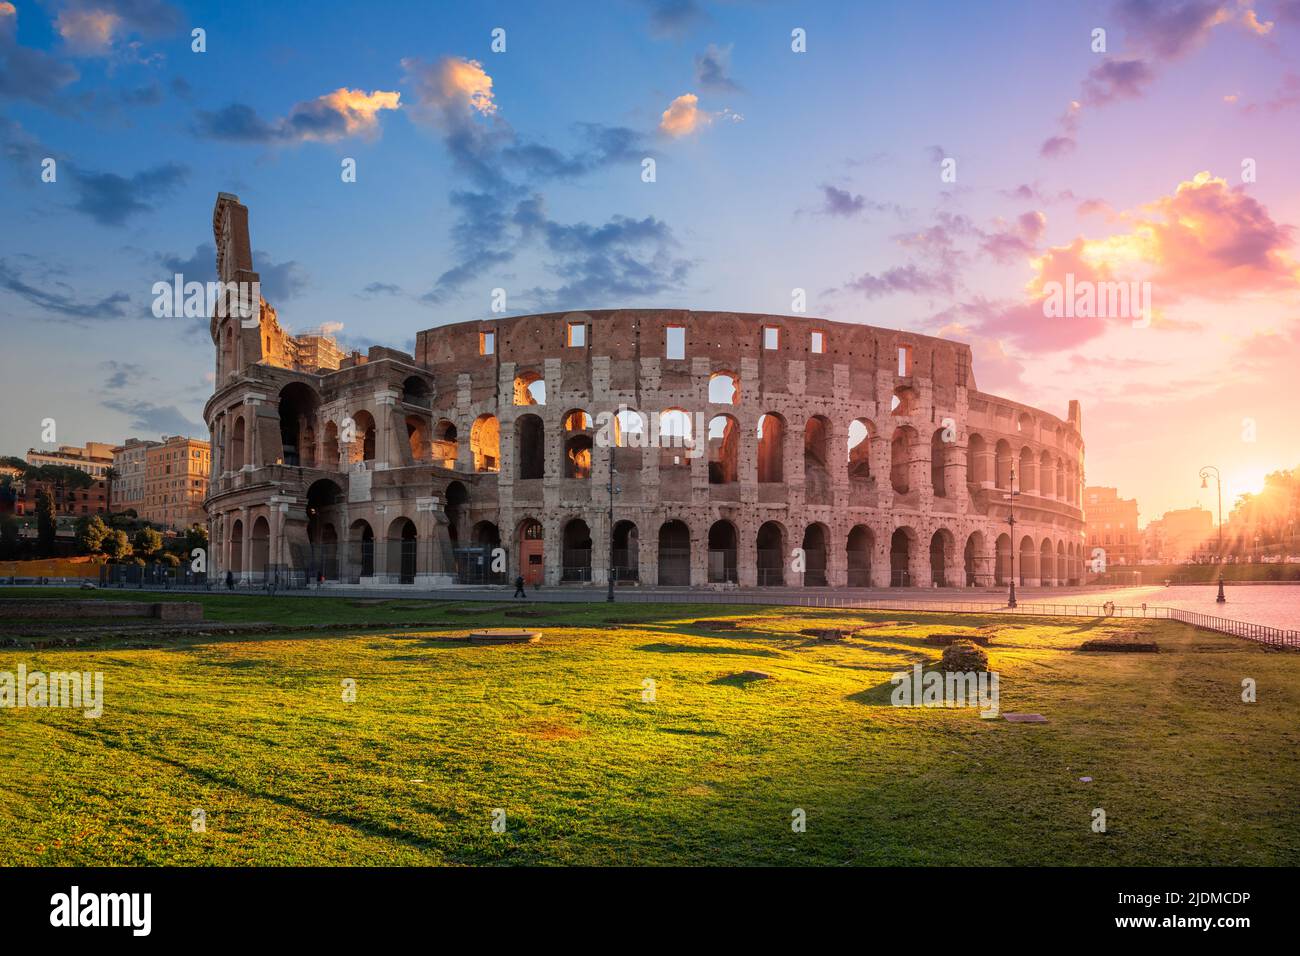 Rom, Italien mit dem antiken Amphitheater des römischen Kolosseums bei Sonnenaufgang. Stockfoto